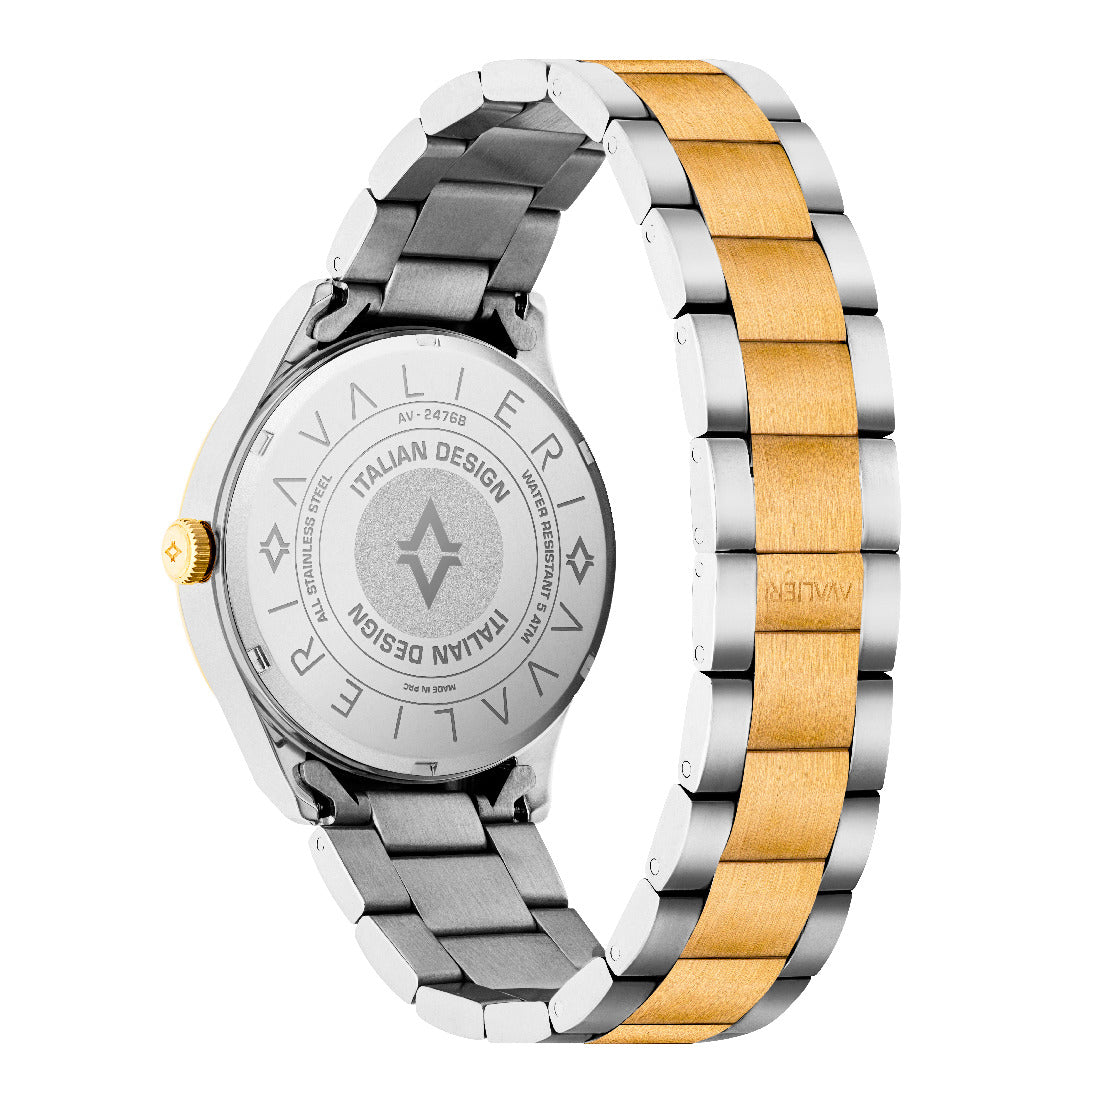 Avalieri Men's Quartz Watch With Silver White Dial - AV-2476B